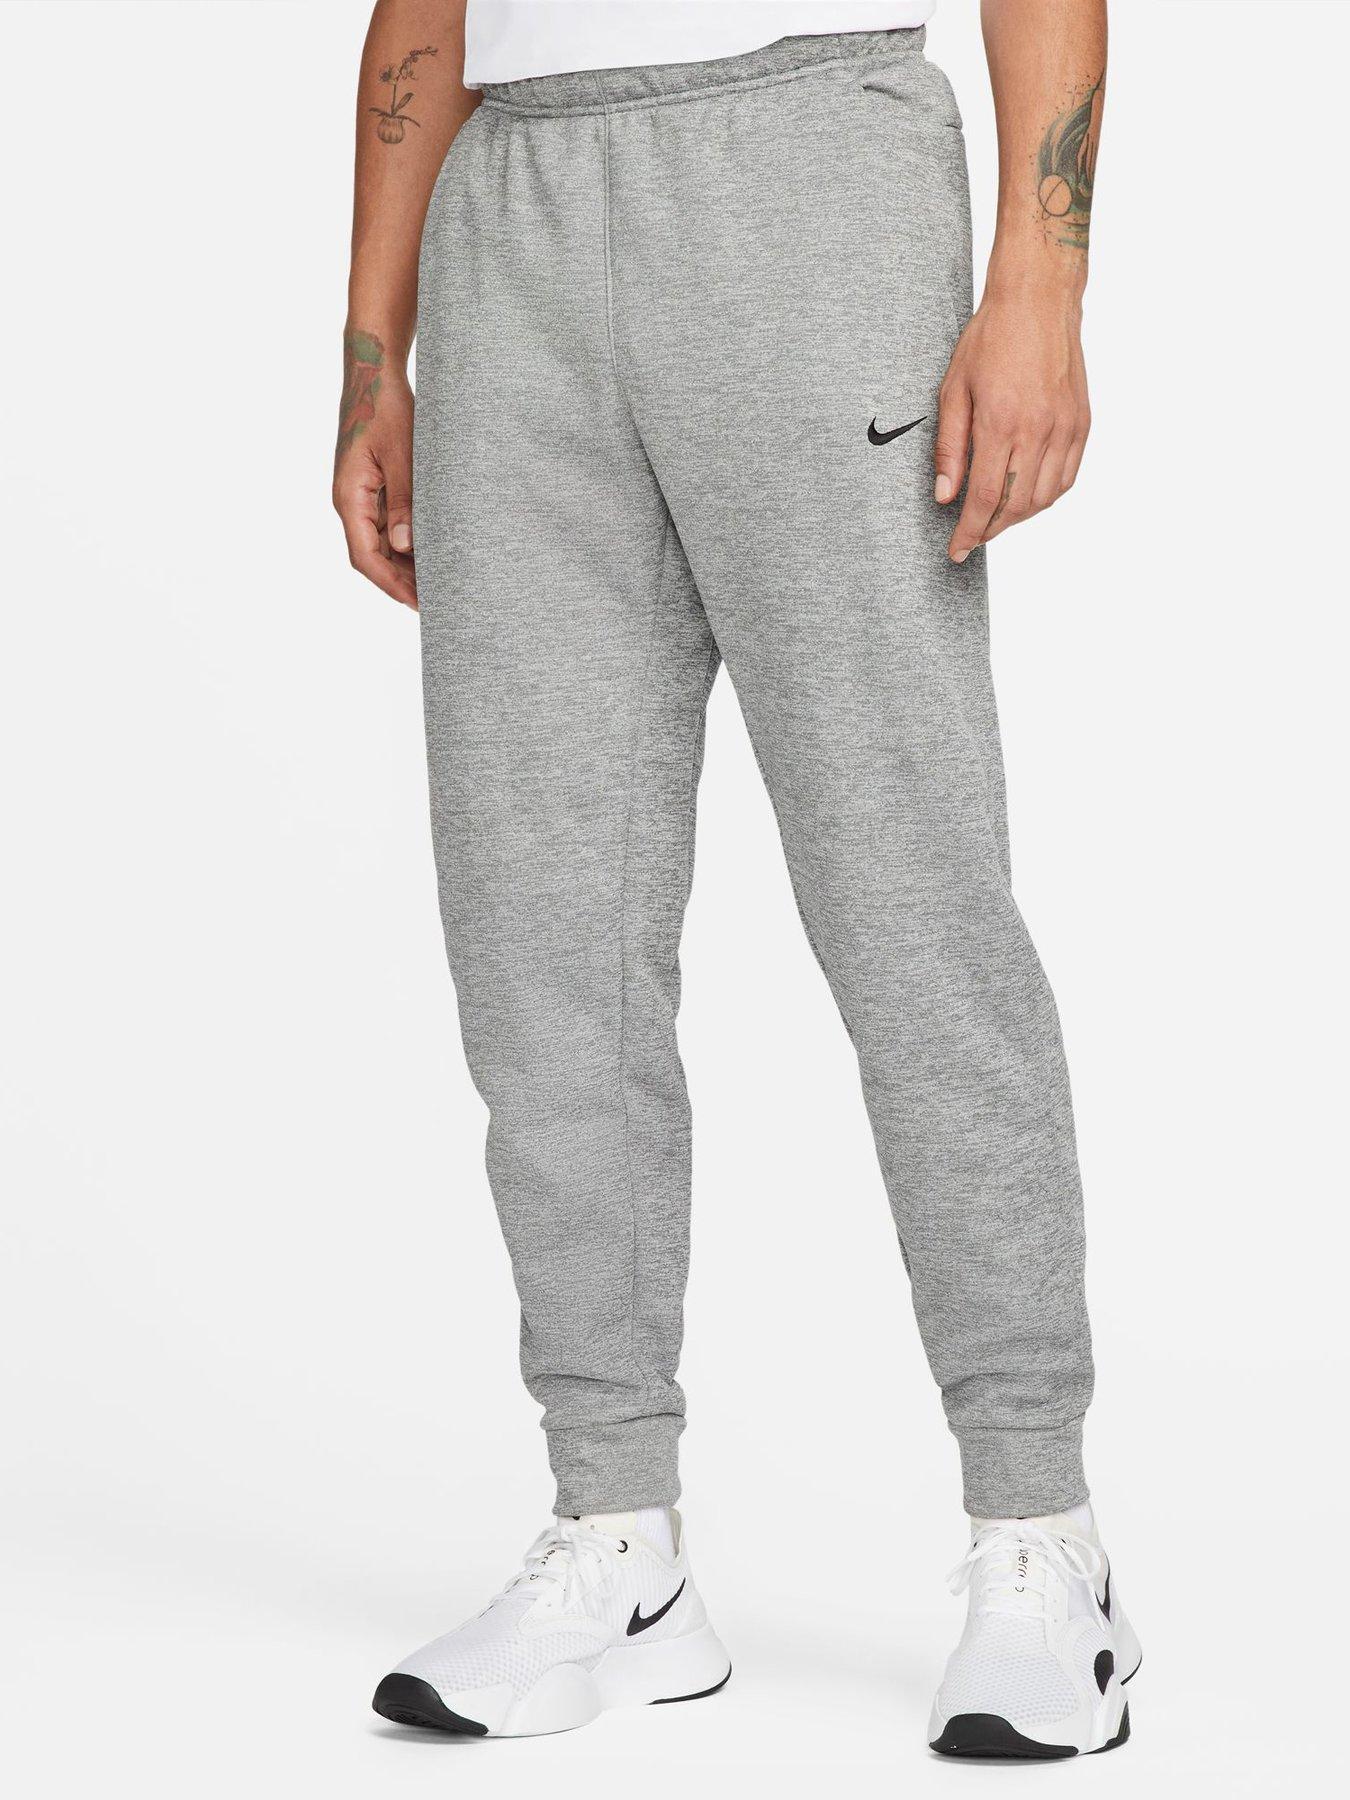 Nike Train Therma Taper Pants - Grey/Black | littlewoods.com